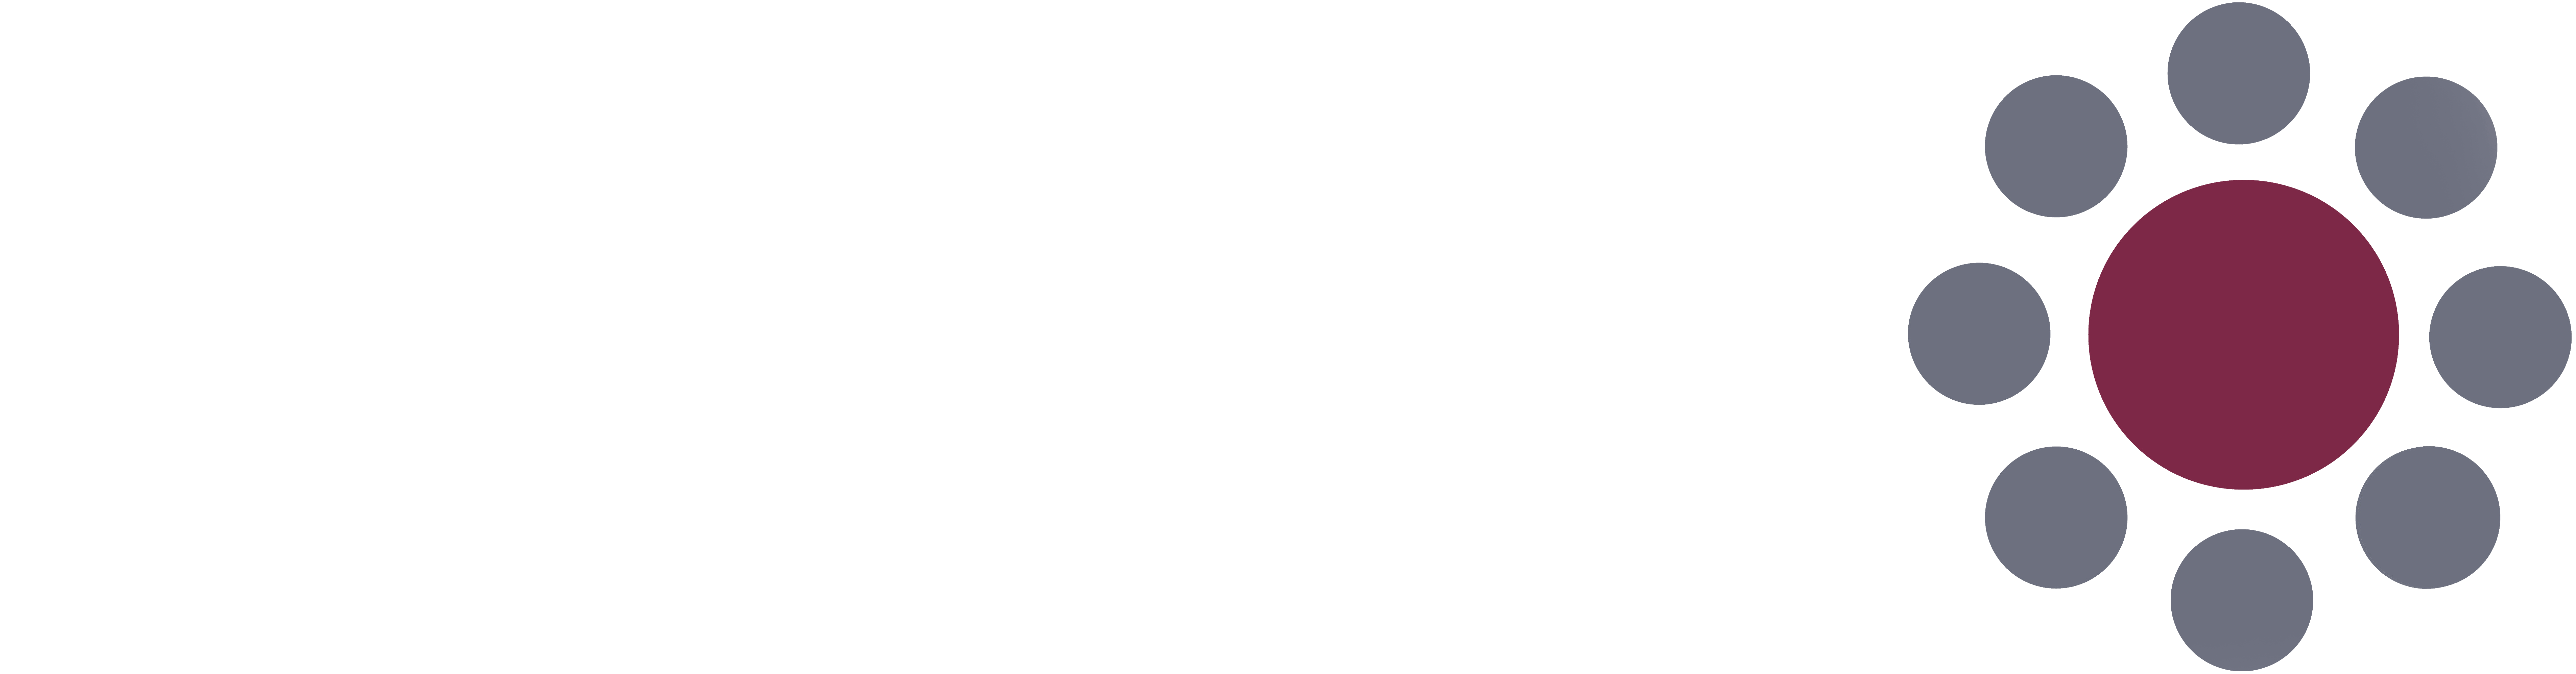 illustrated architecture